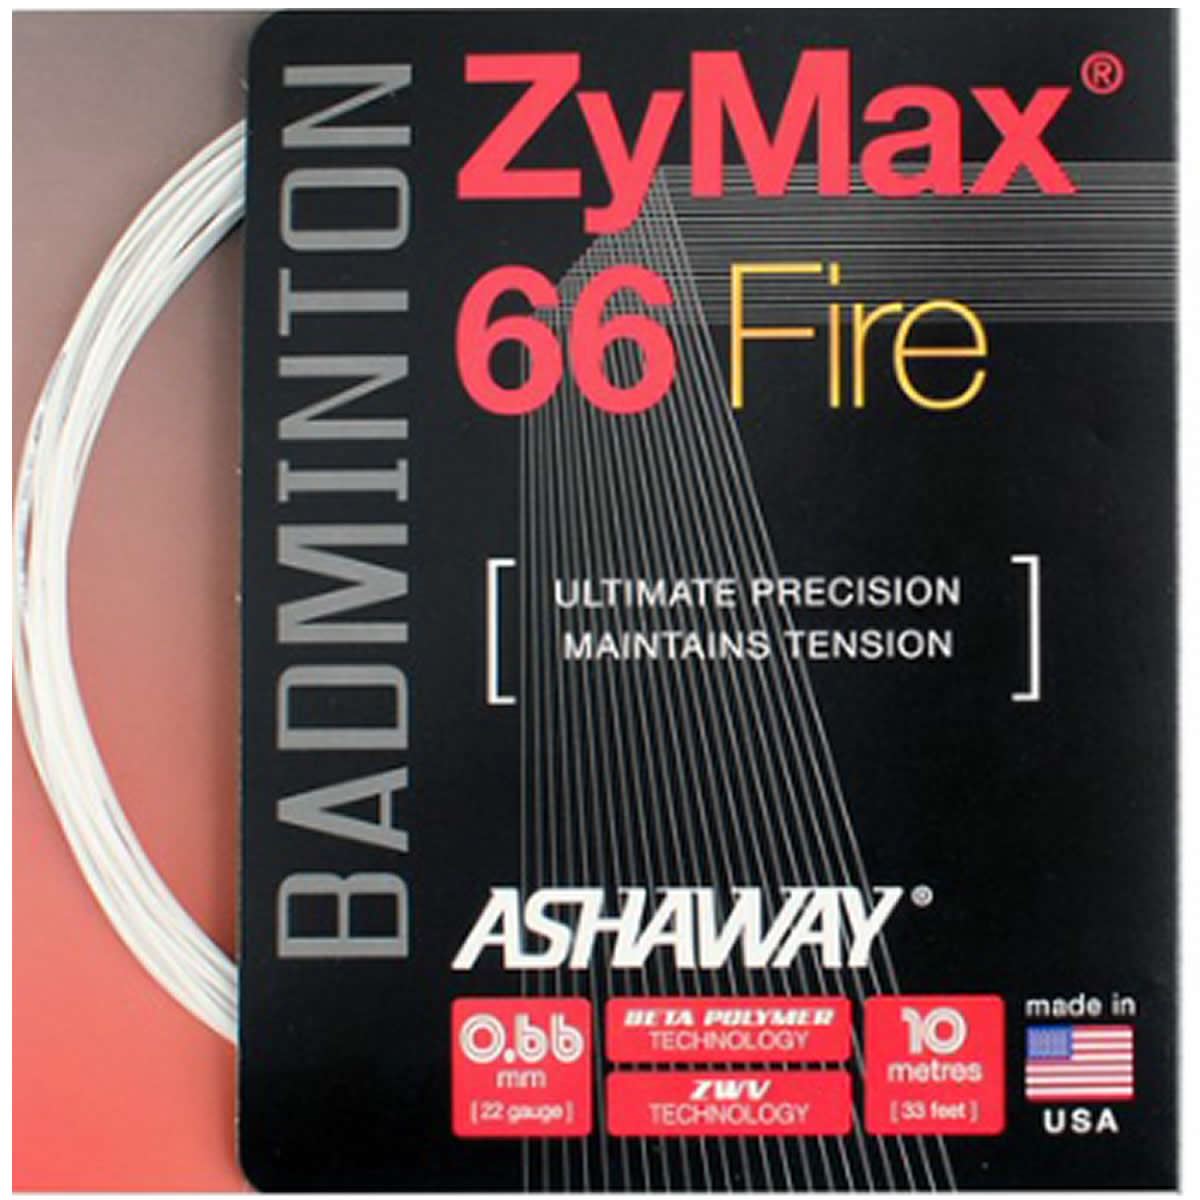 Ashaway Zymax 66 Fire Badminton String White - 066MM - 10m Packet